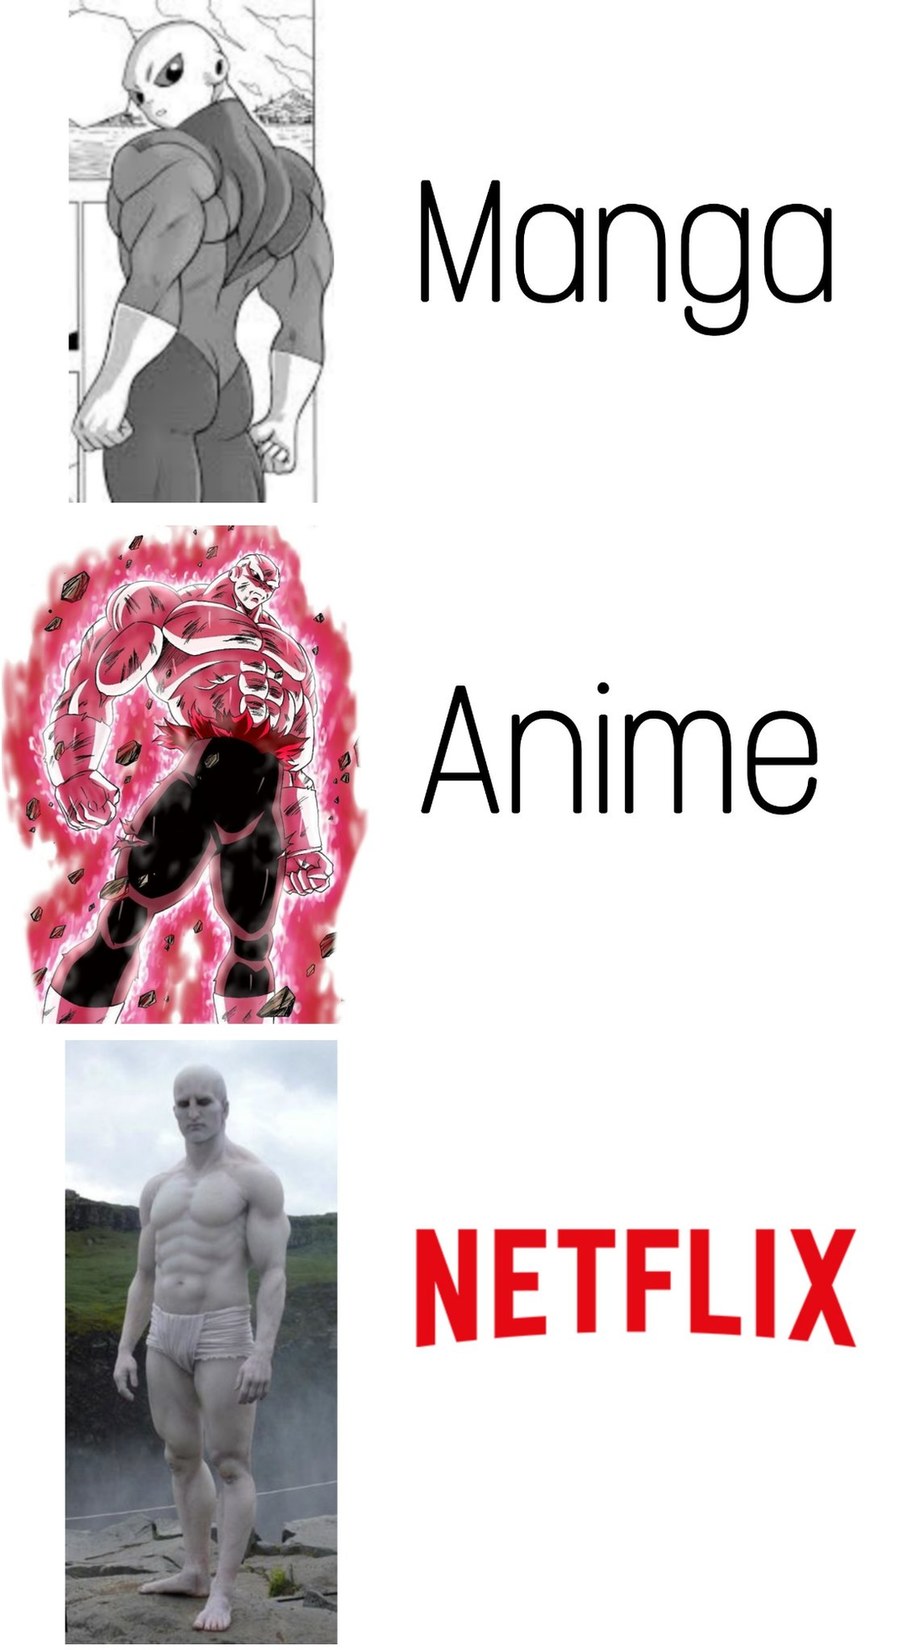 Netflix = propagande woke - meme